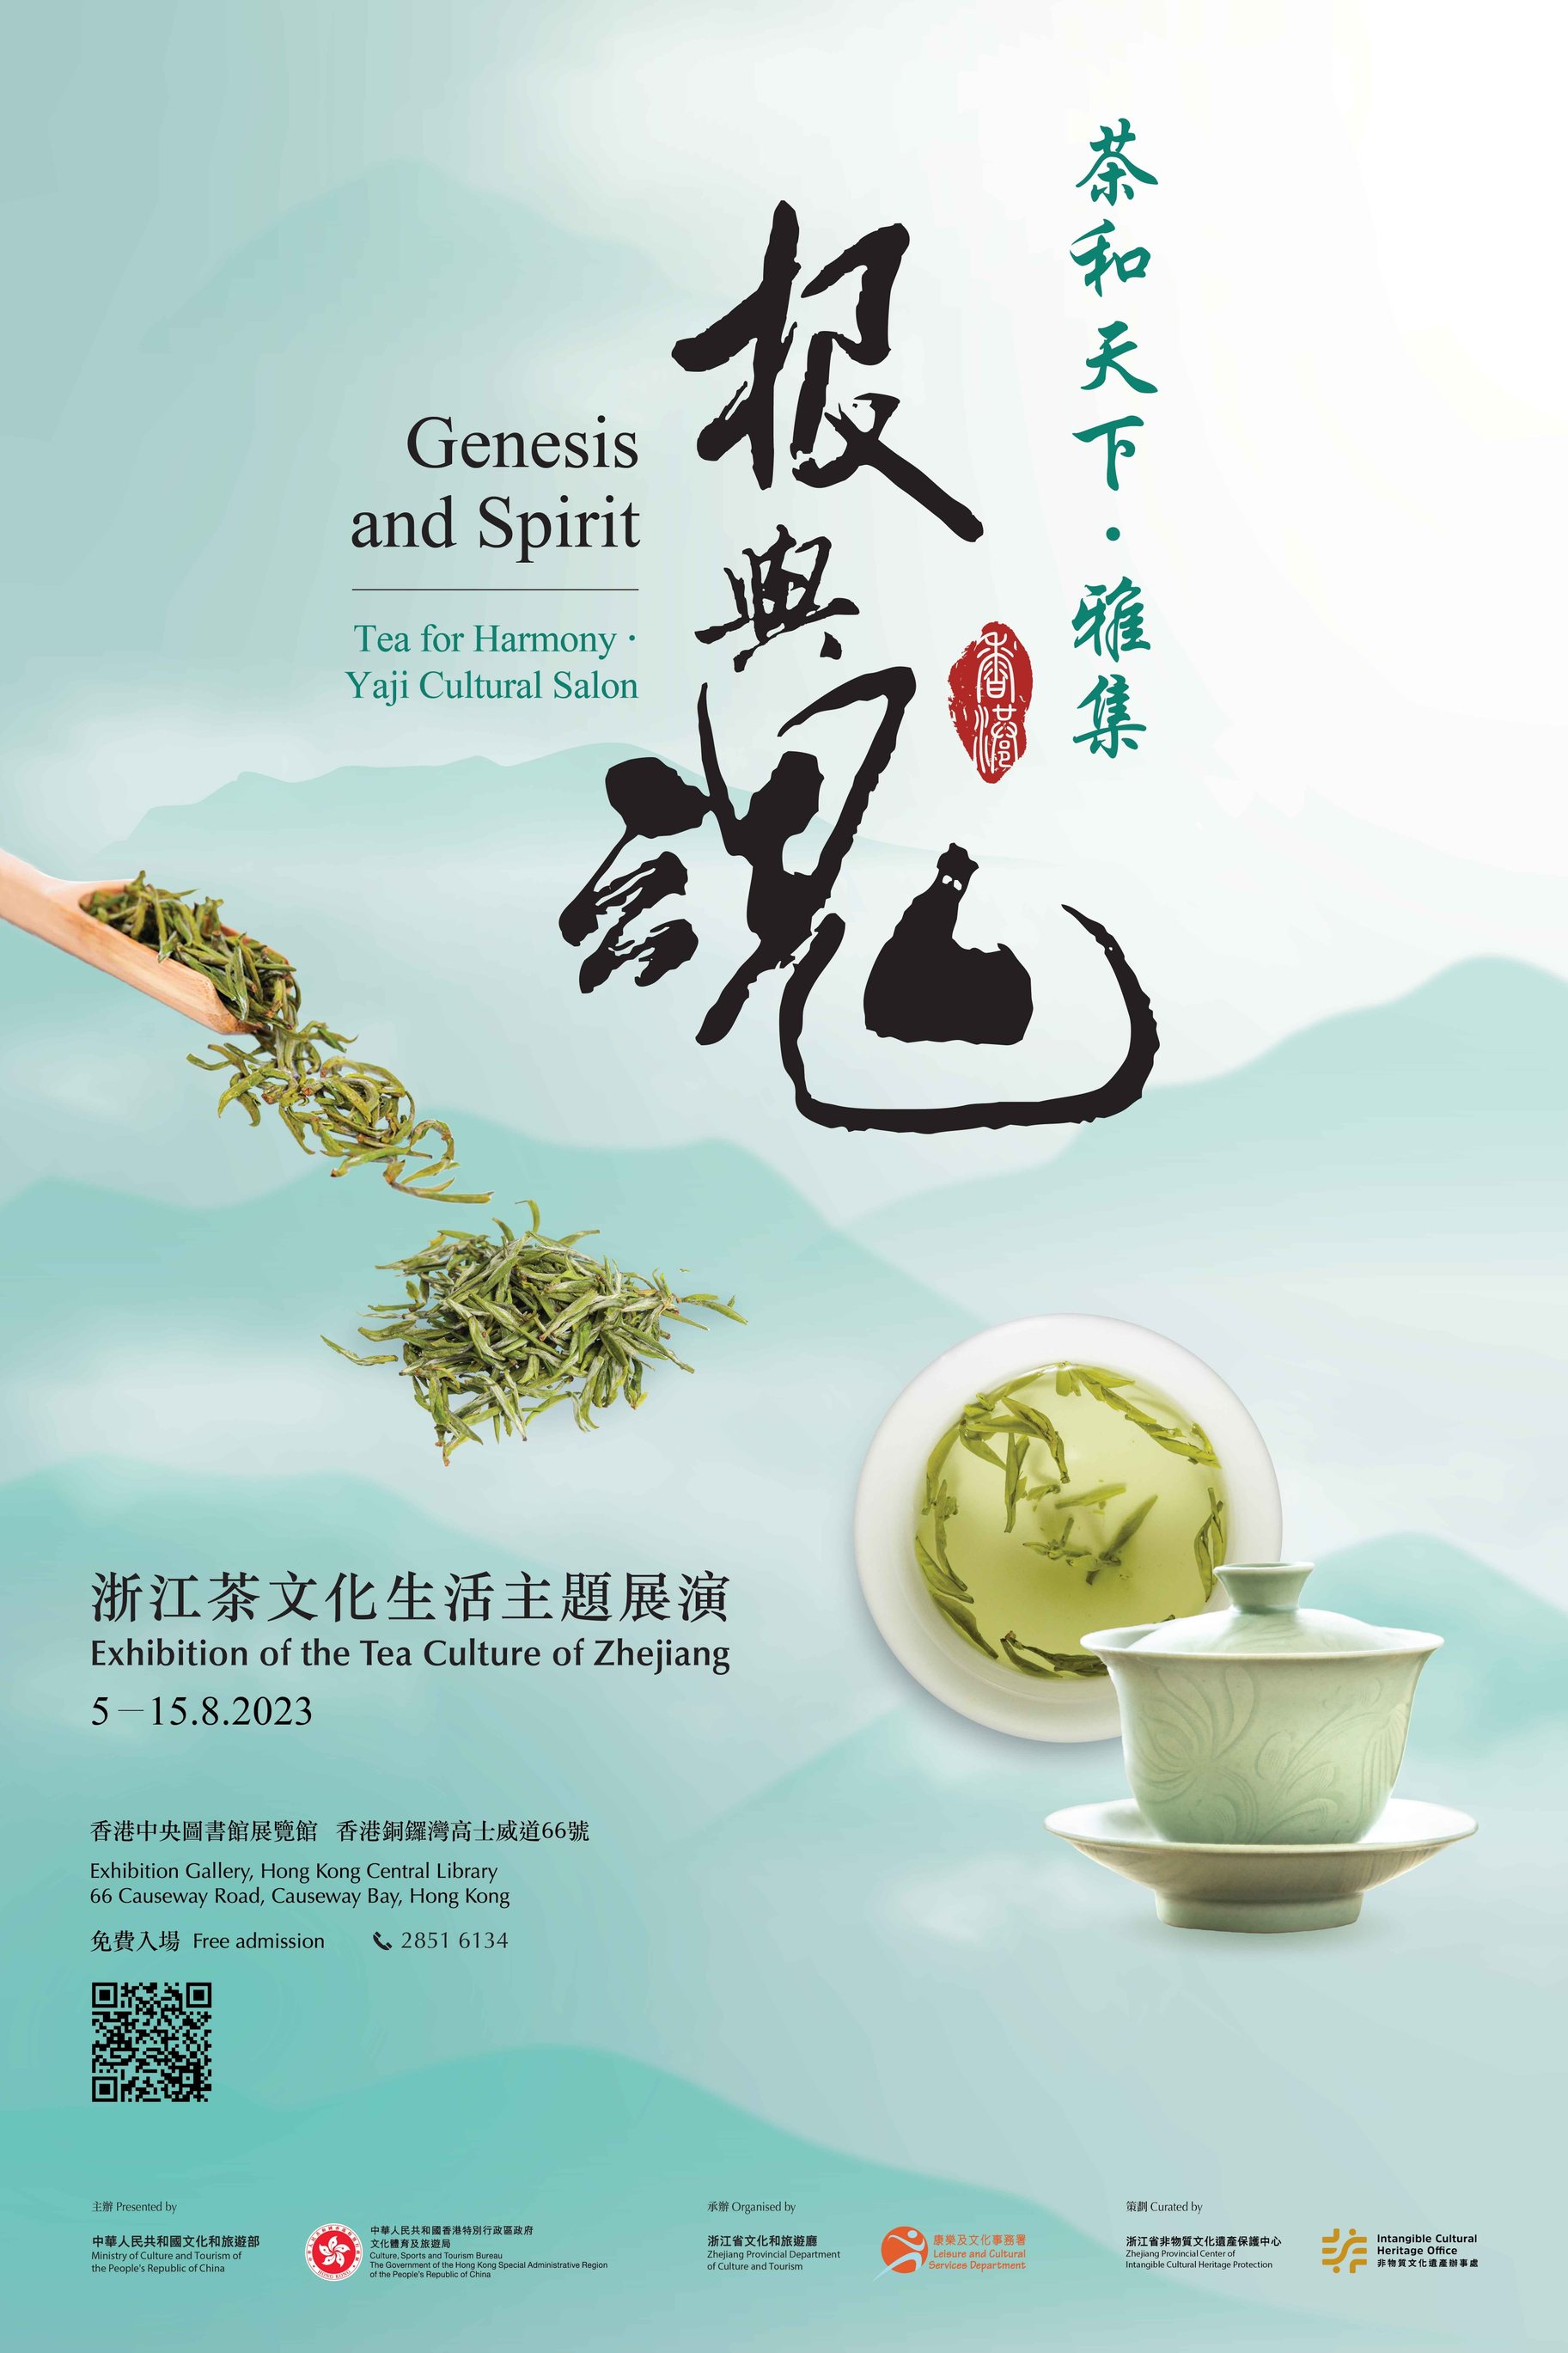 Genesis and Spirit - Tea for Harmony．Yaji Cultural Salon : Exhibition on Tea Culture of Zhejiang